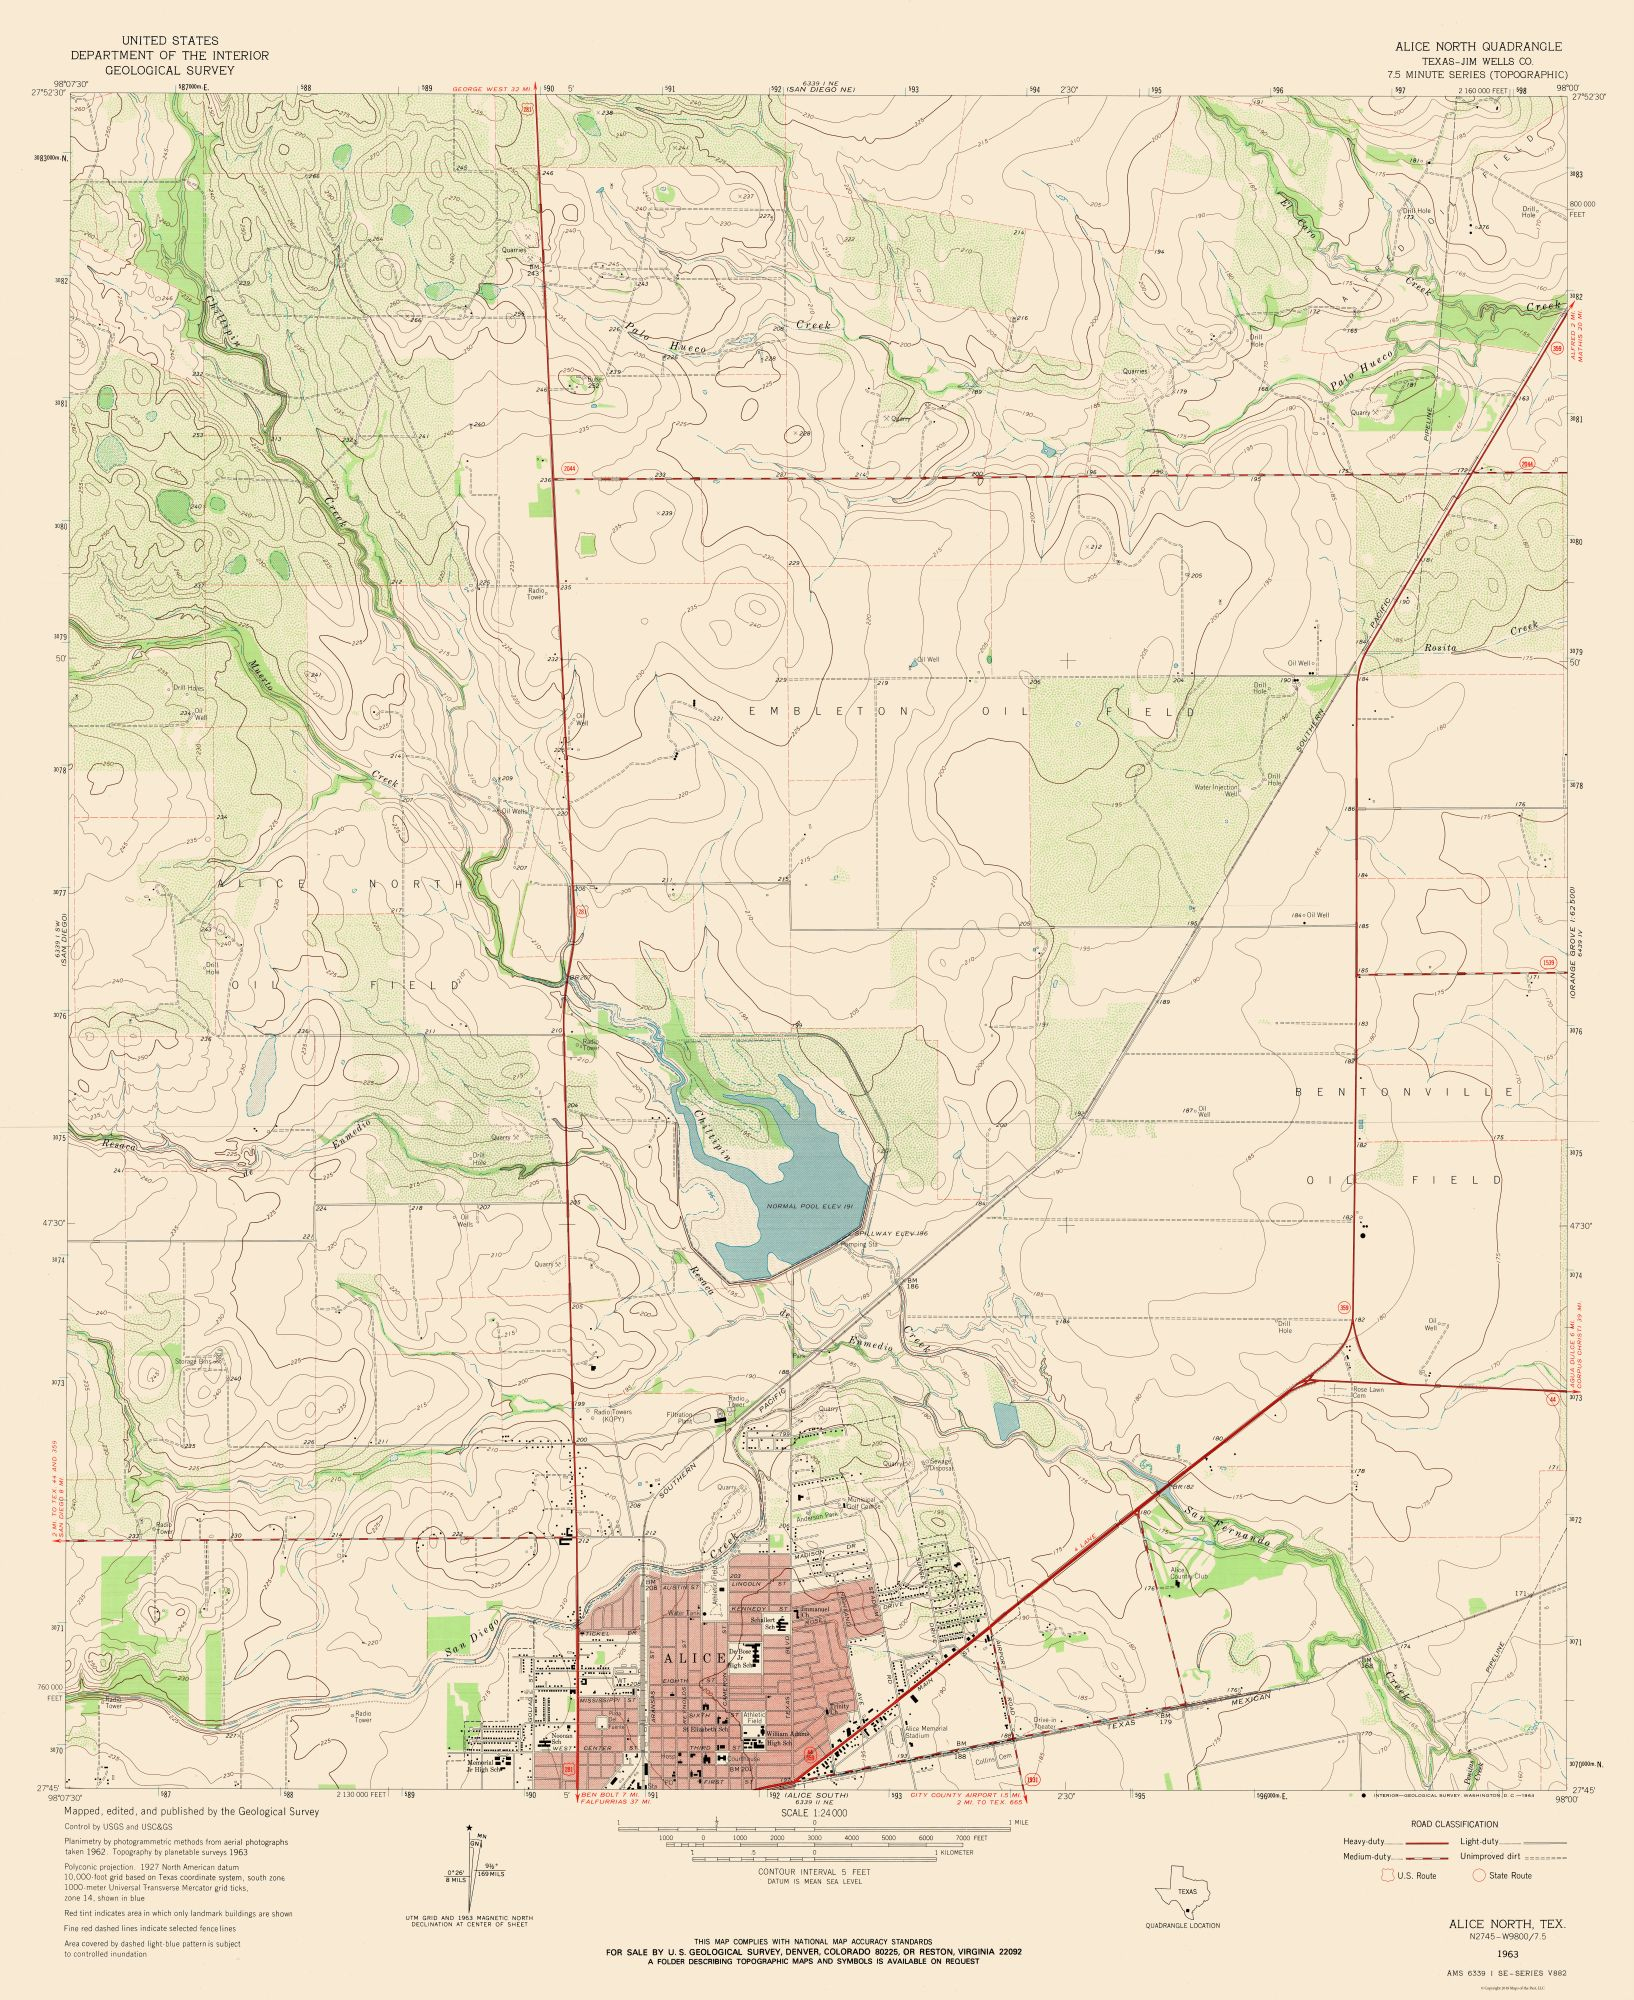 Topographic Map - North Alice Texas Quad - Usgs 1963 - 23 X 28.16 - Alice Texas Map